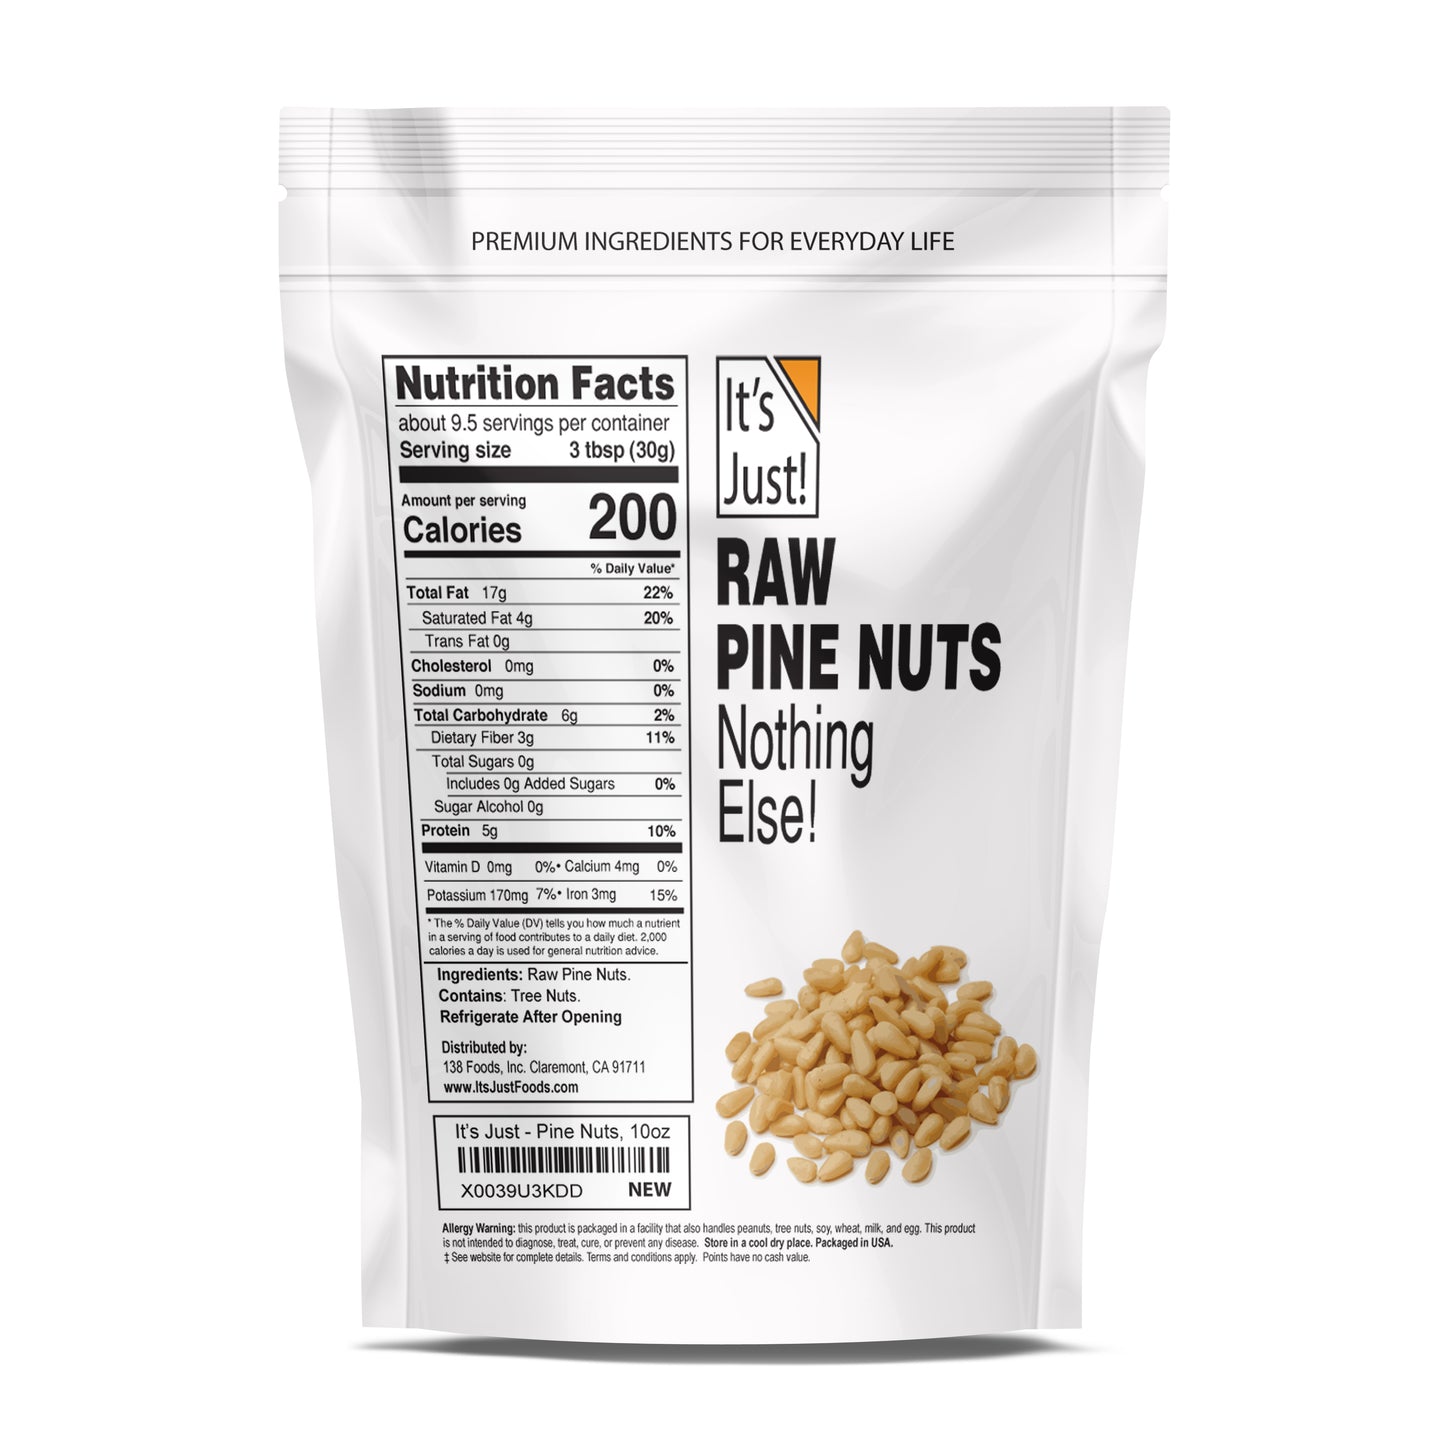 It's Just! - Raw Pine Nuts